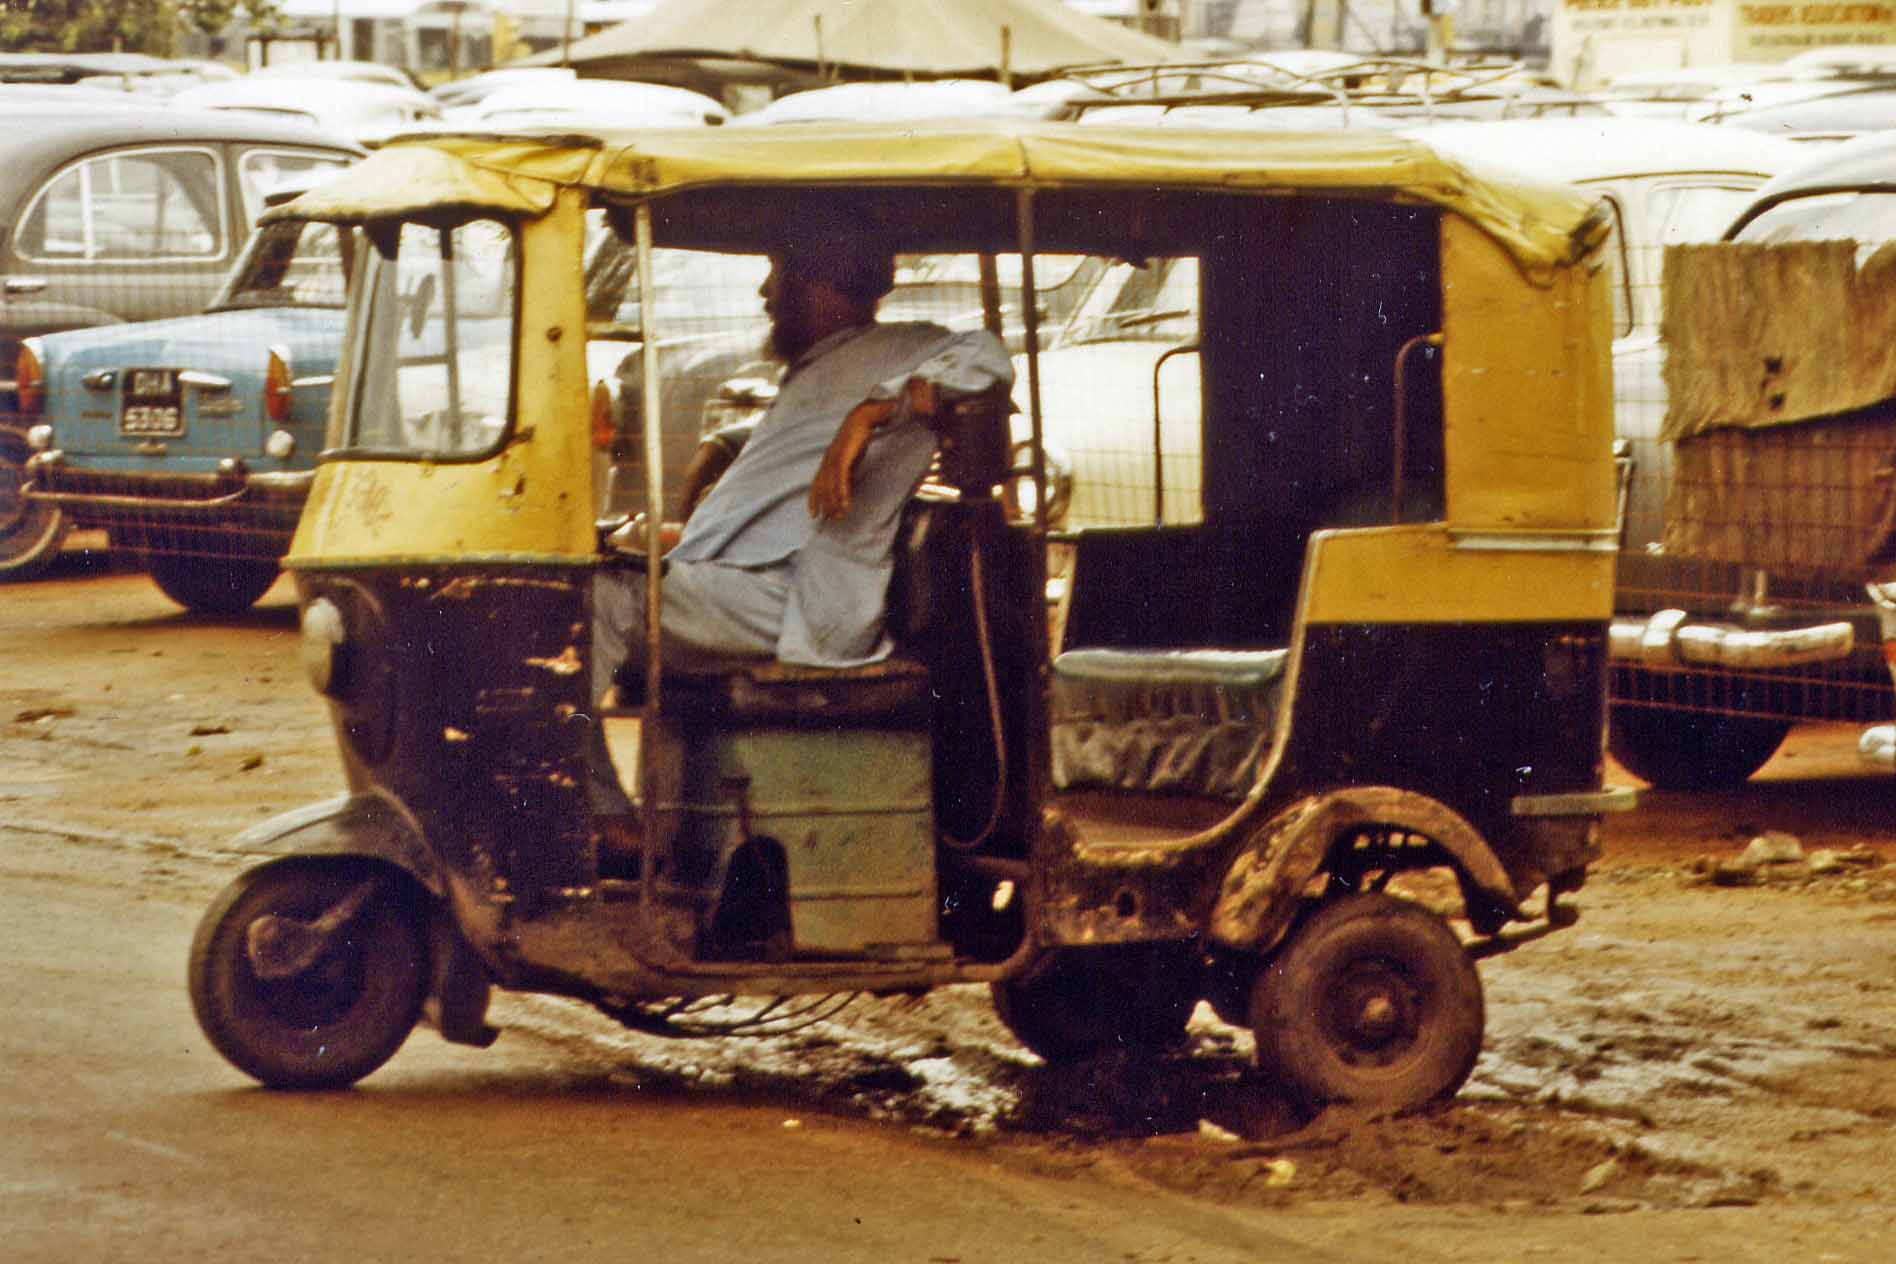 Scooter in New Delhi